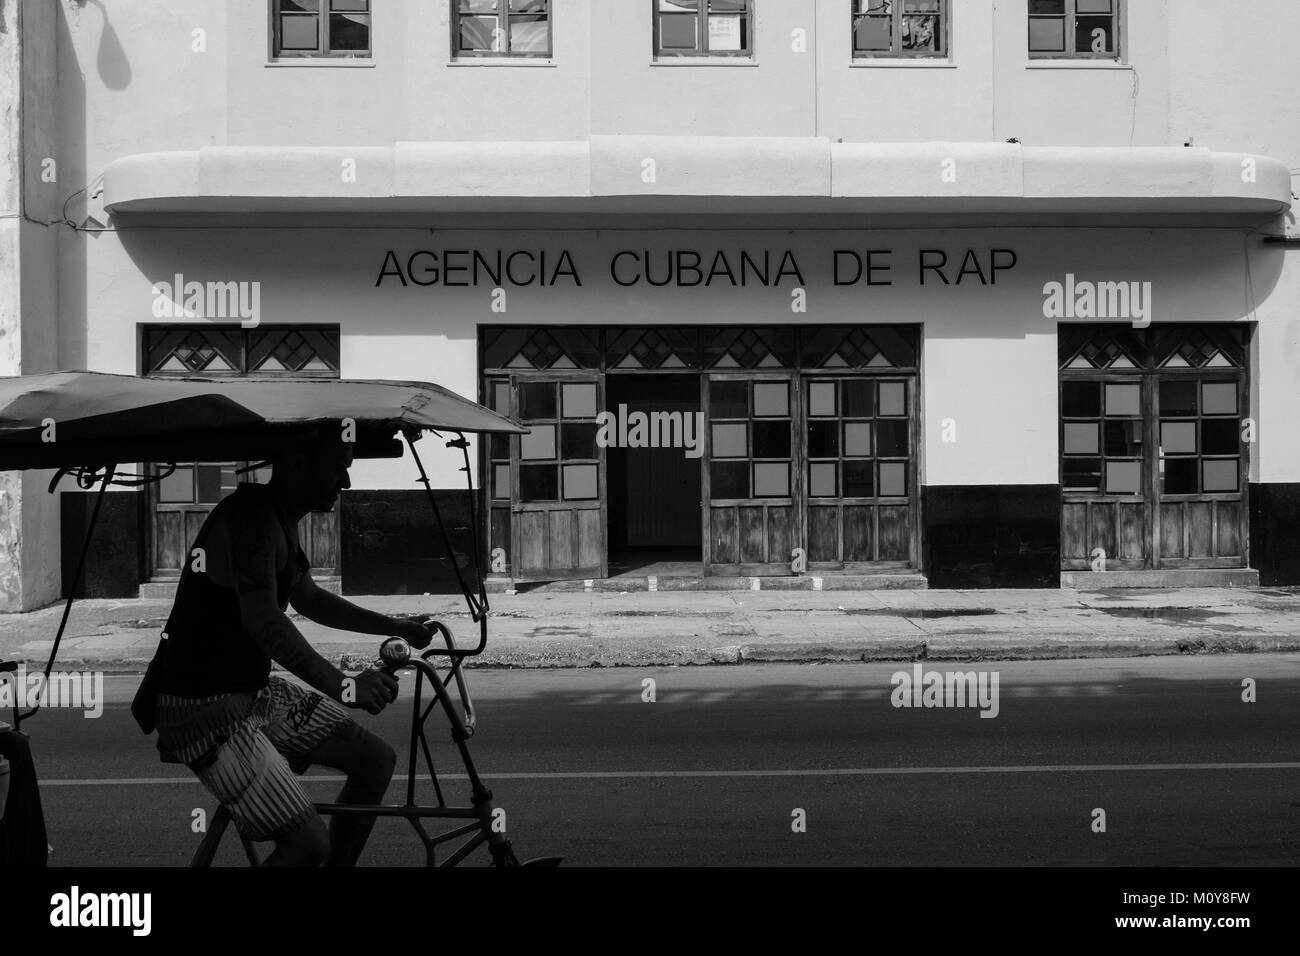 Il rap cubano agenzia in Havana, Cuba Foto Stock